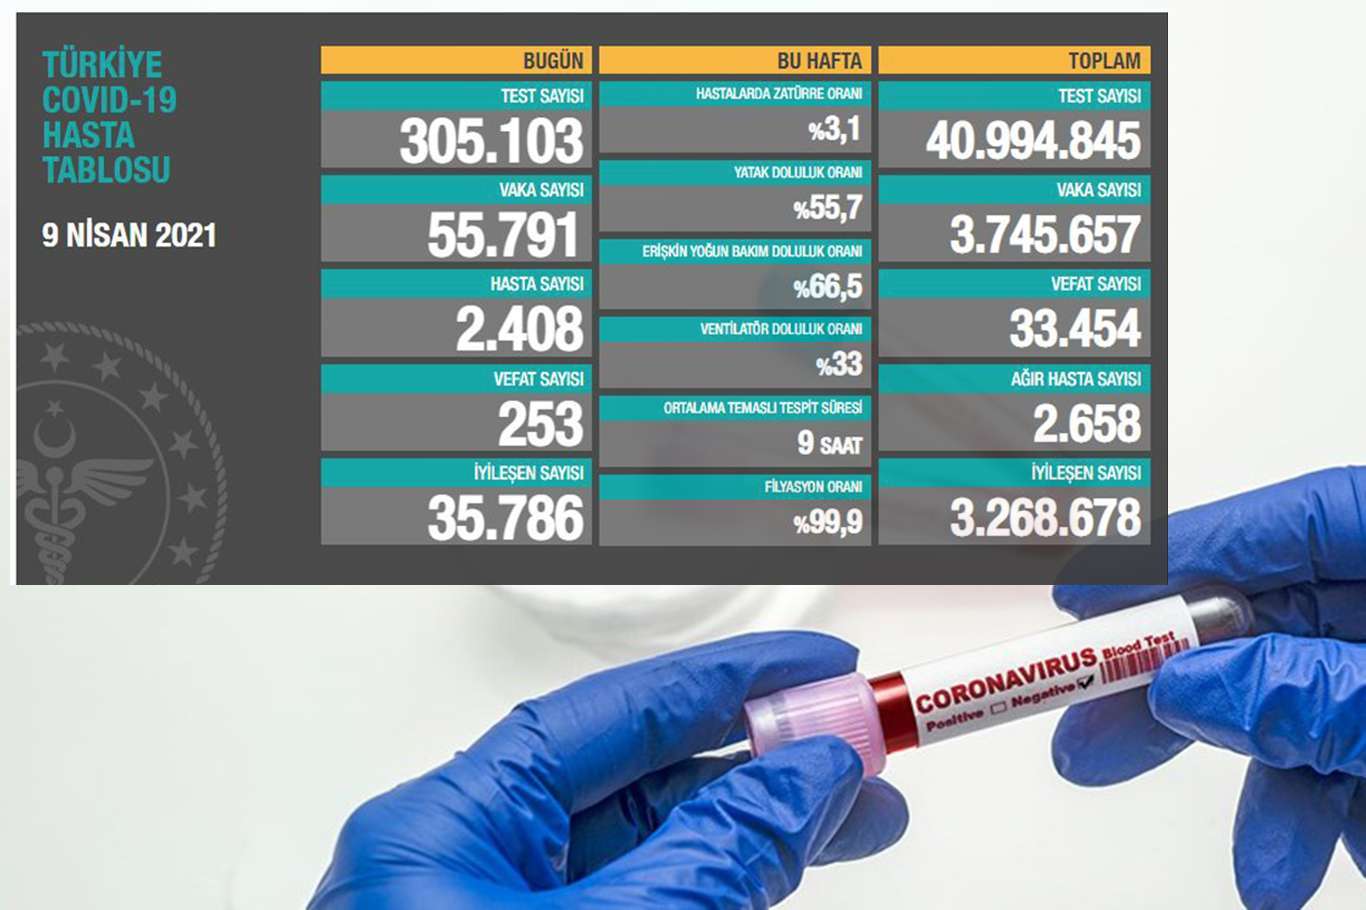 Turkey's confirmed coronavirus cases rise by 55,791